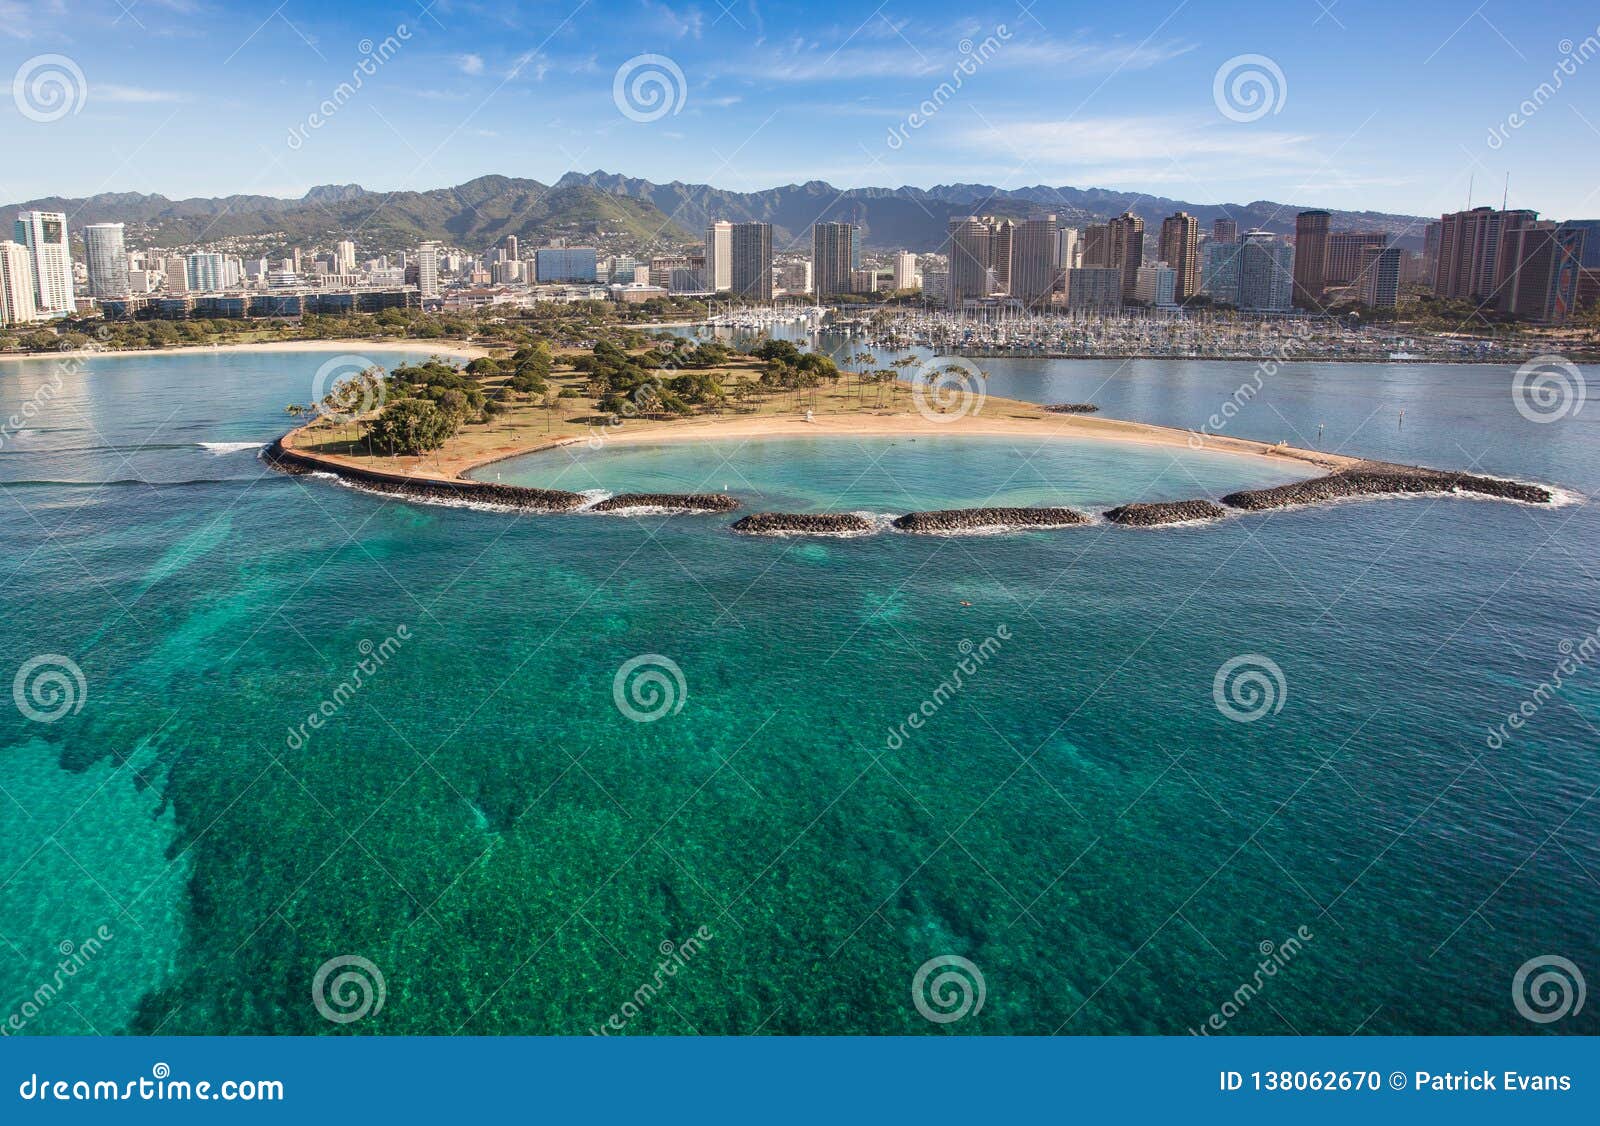 beautiful aerial view of waikiki beach magic island oahu hawaii